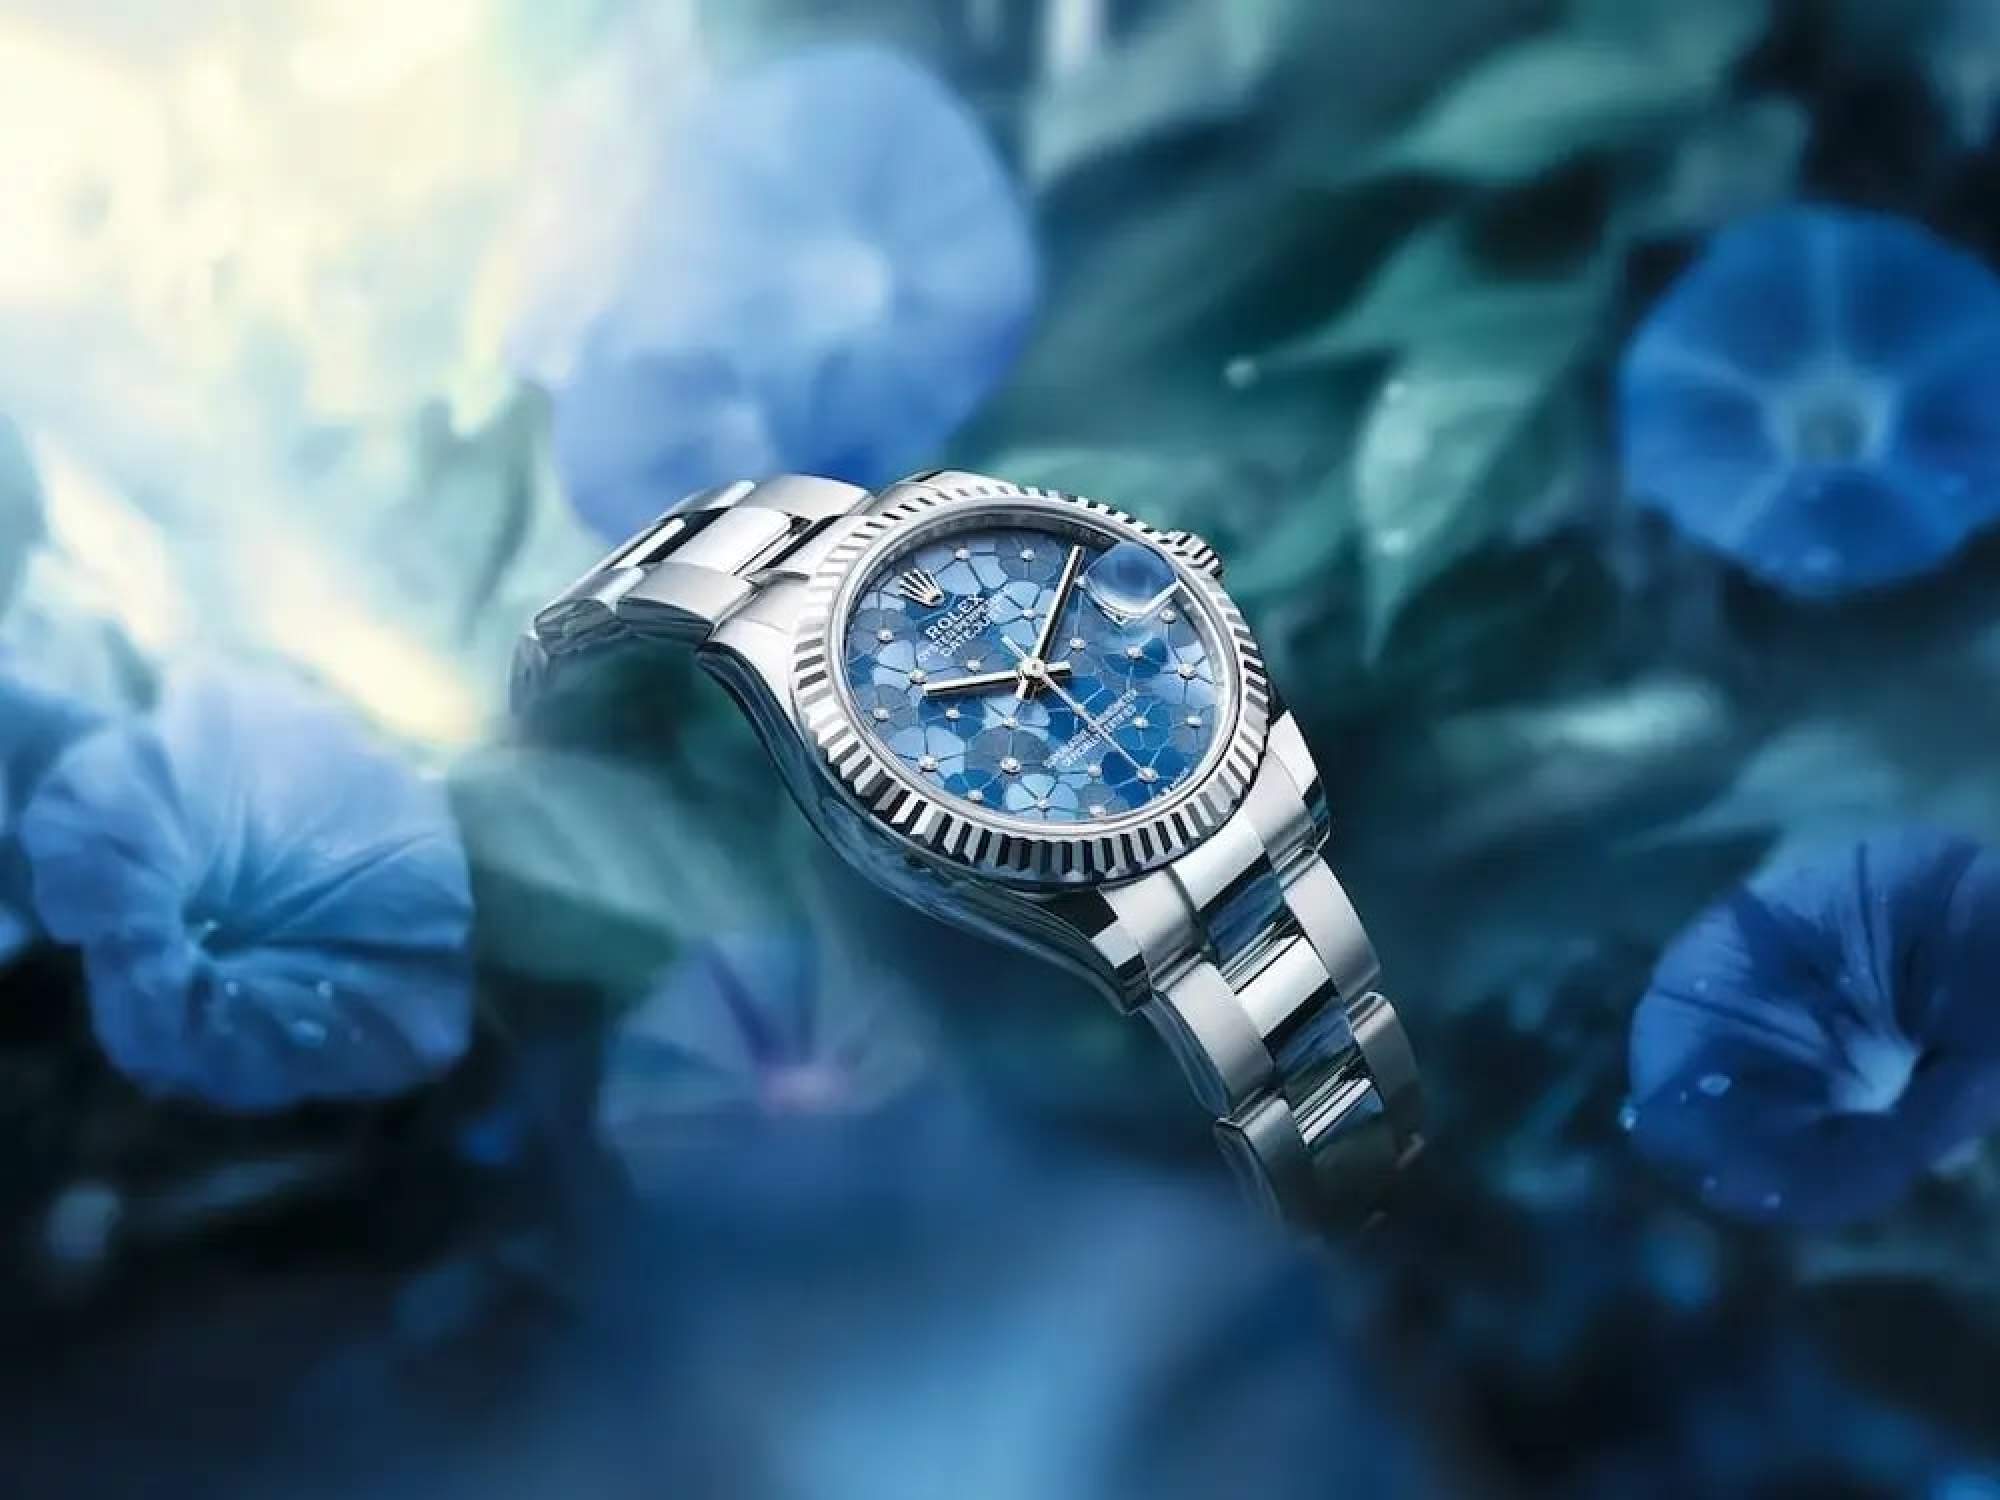 Watch trends: Louis Vuitton, Cerruti 1881 among notable timepiece